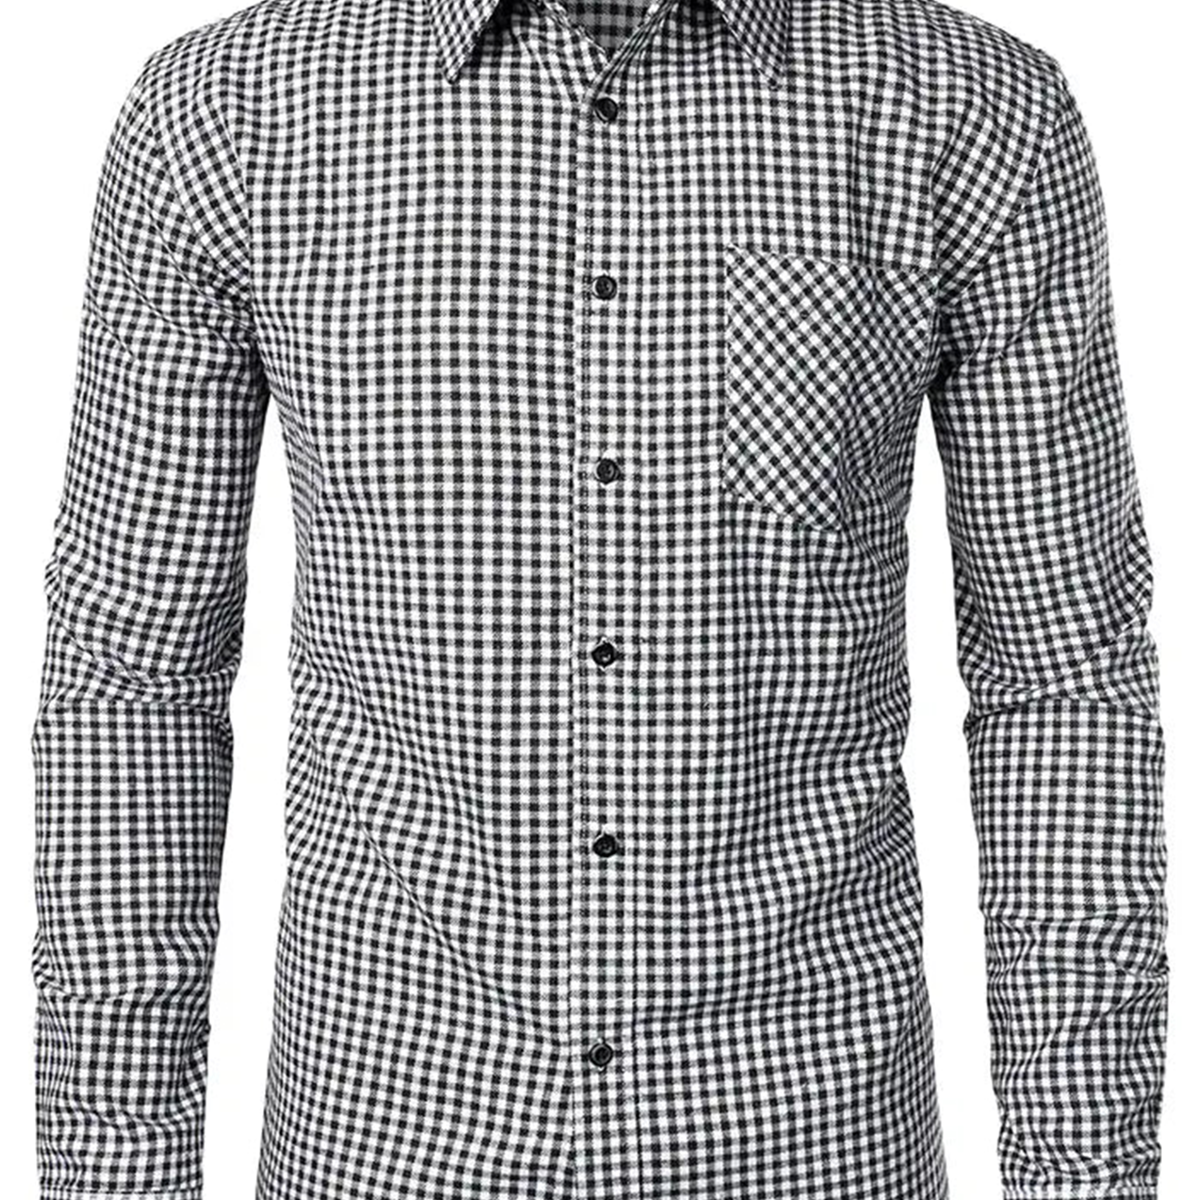 Men's Cotton Long Sleeve Plaid Shirt